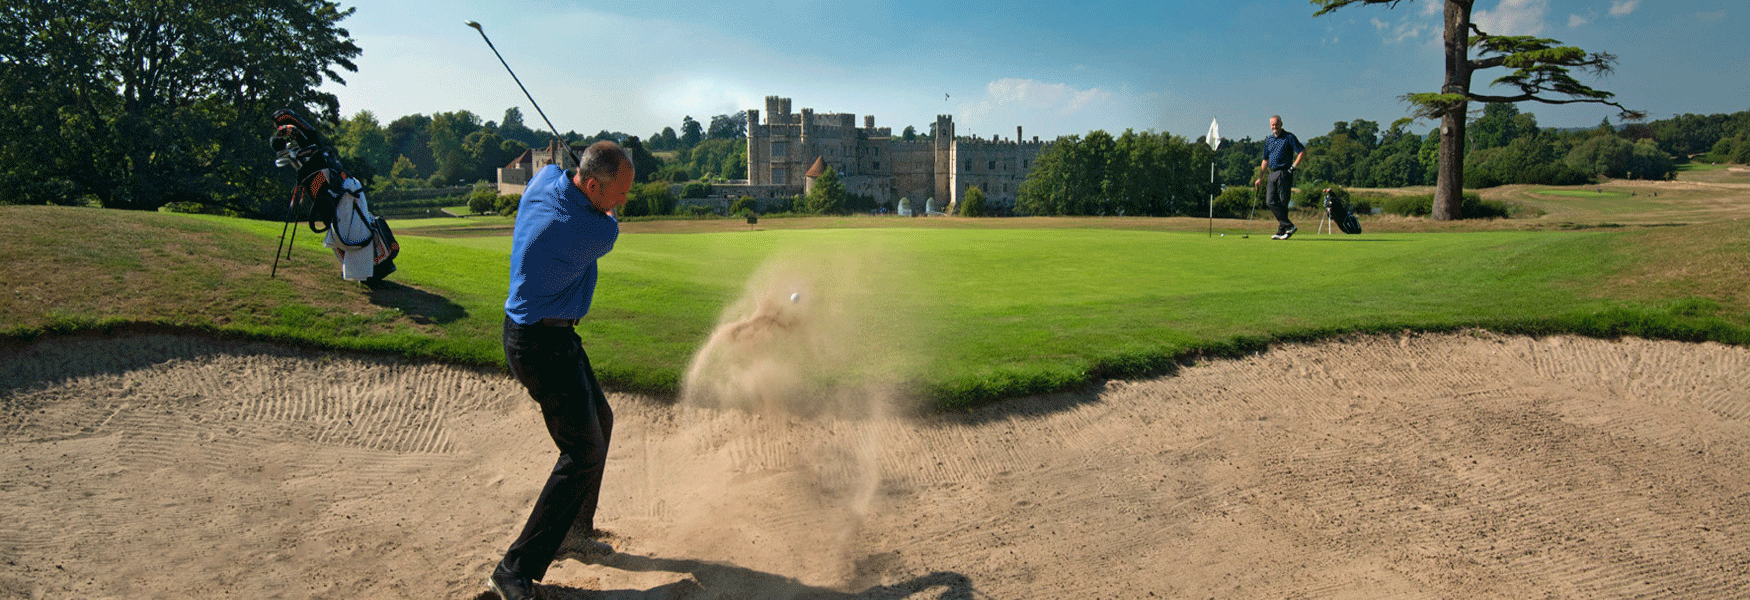 Golf Course at Leeds Castle